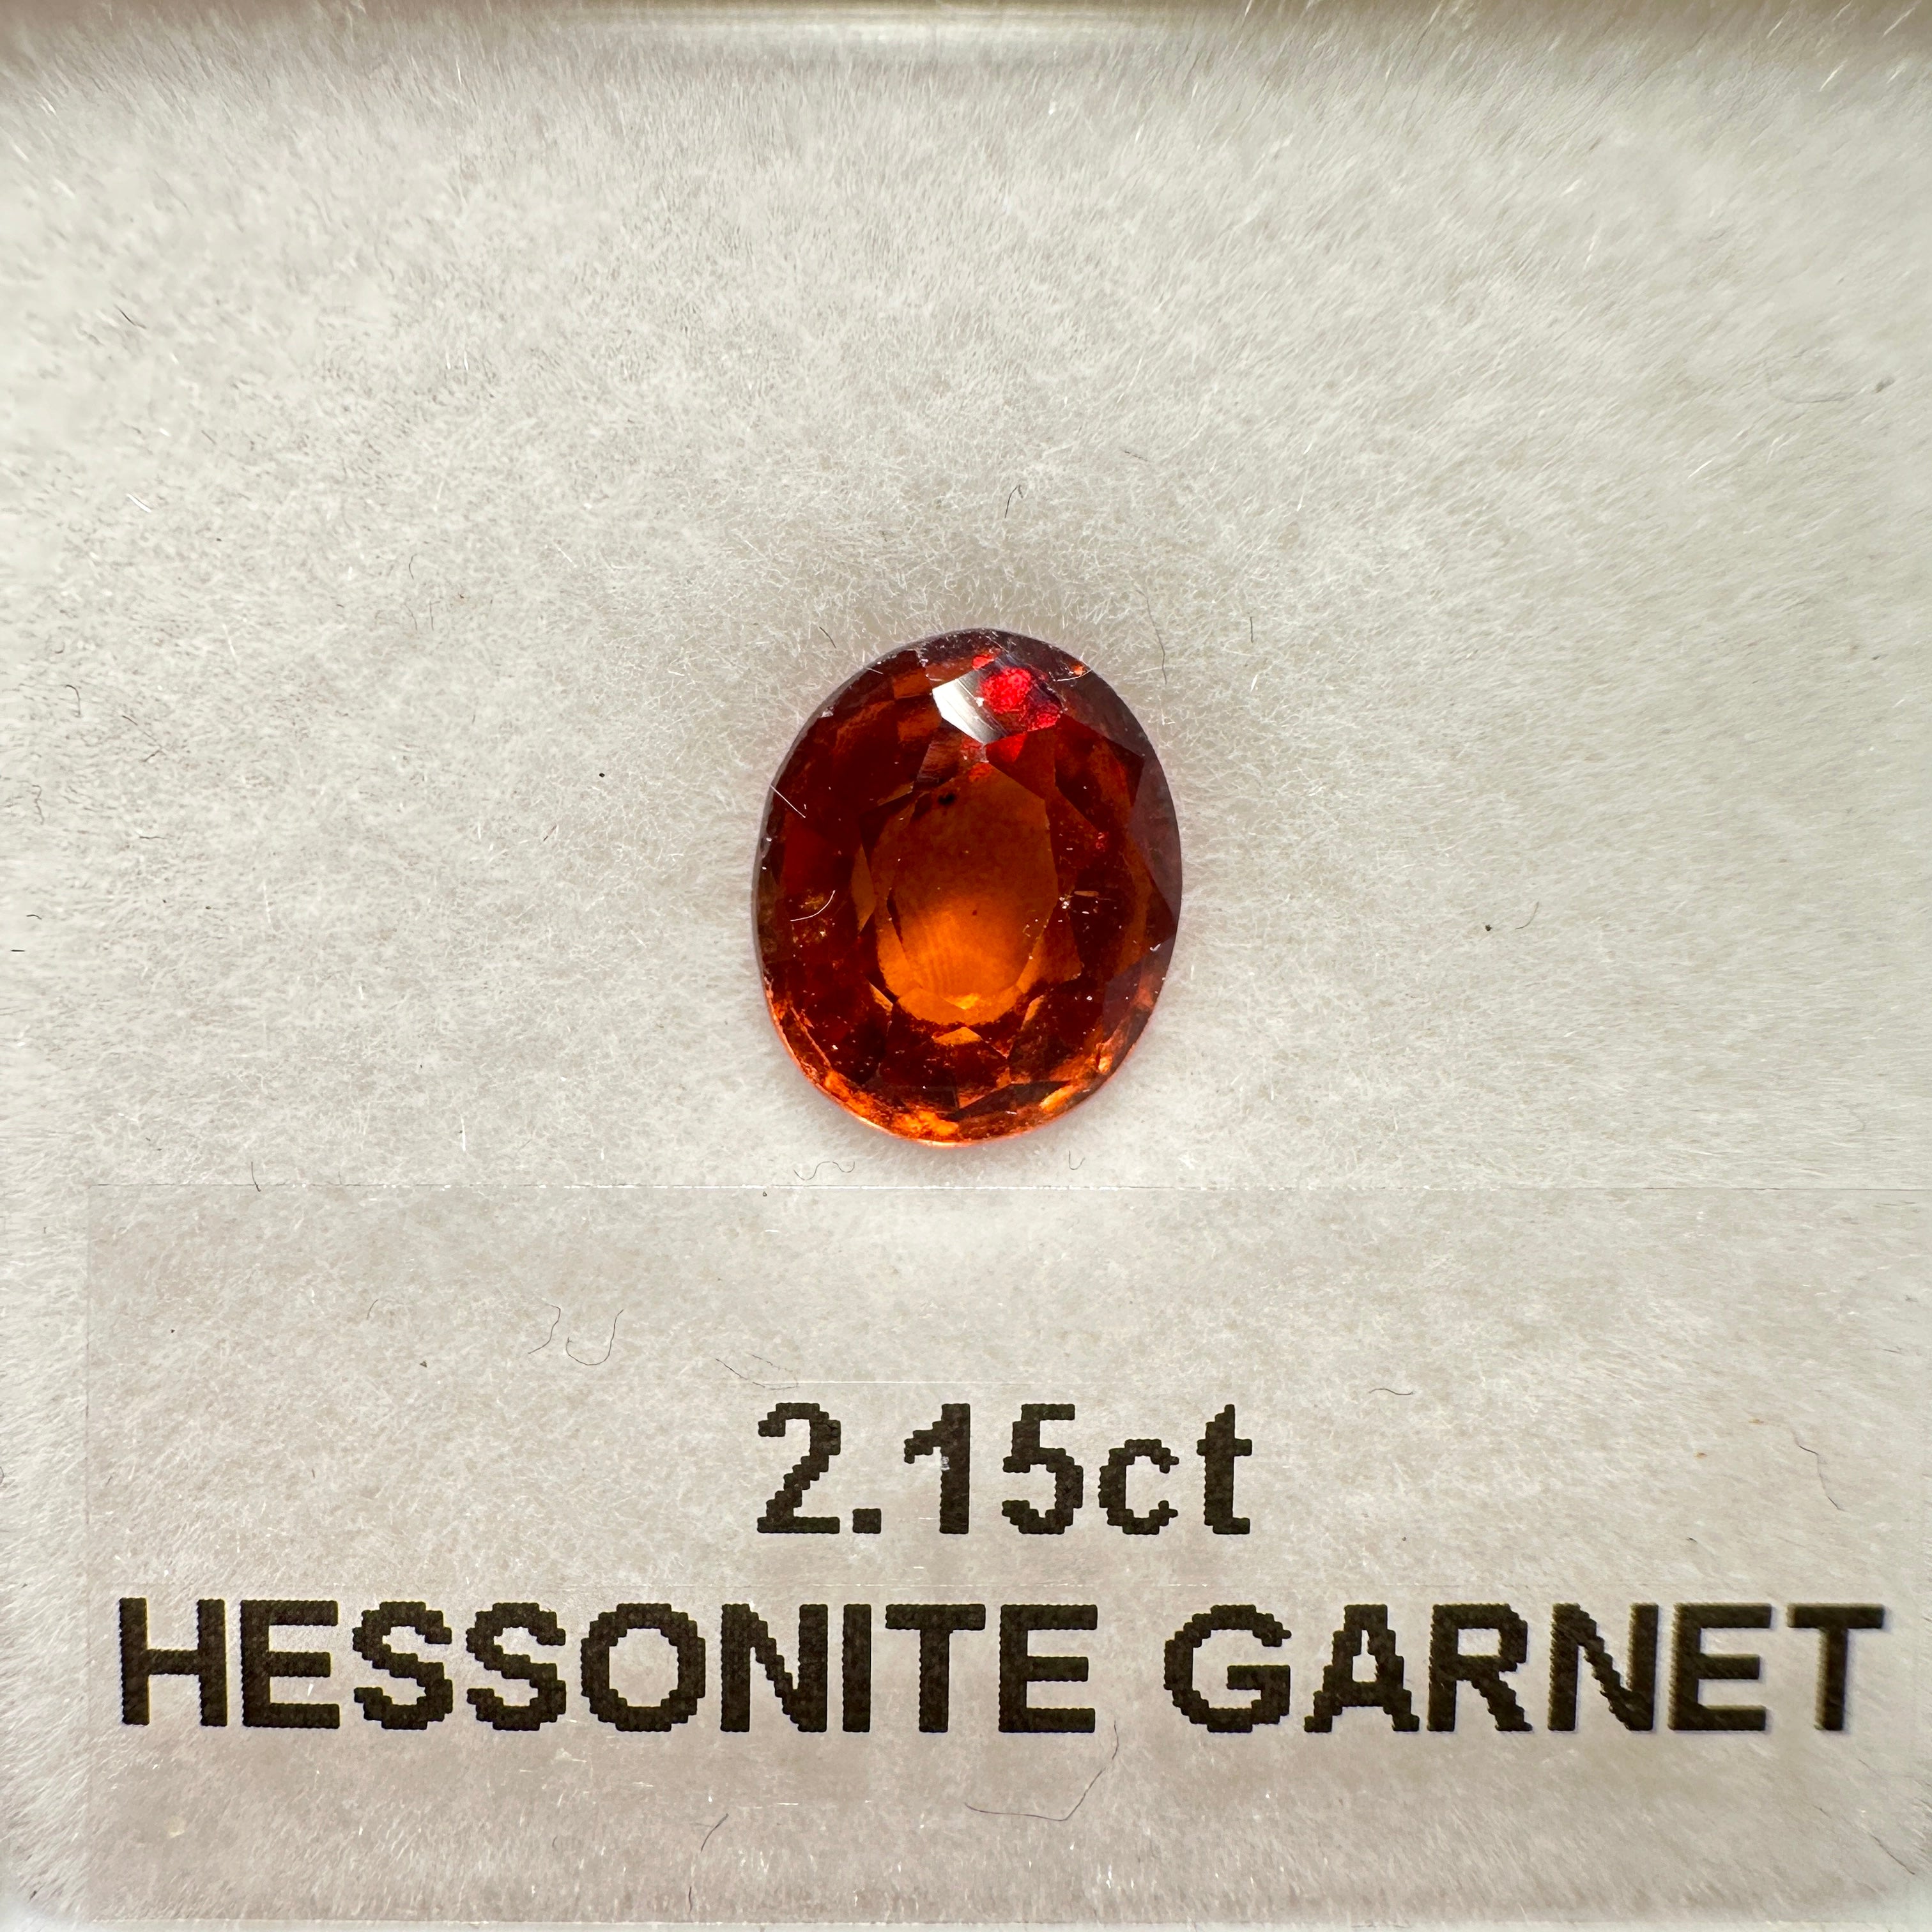 2.15ct Hessonite Garnet, Untreated Unheated, native cut